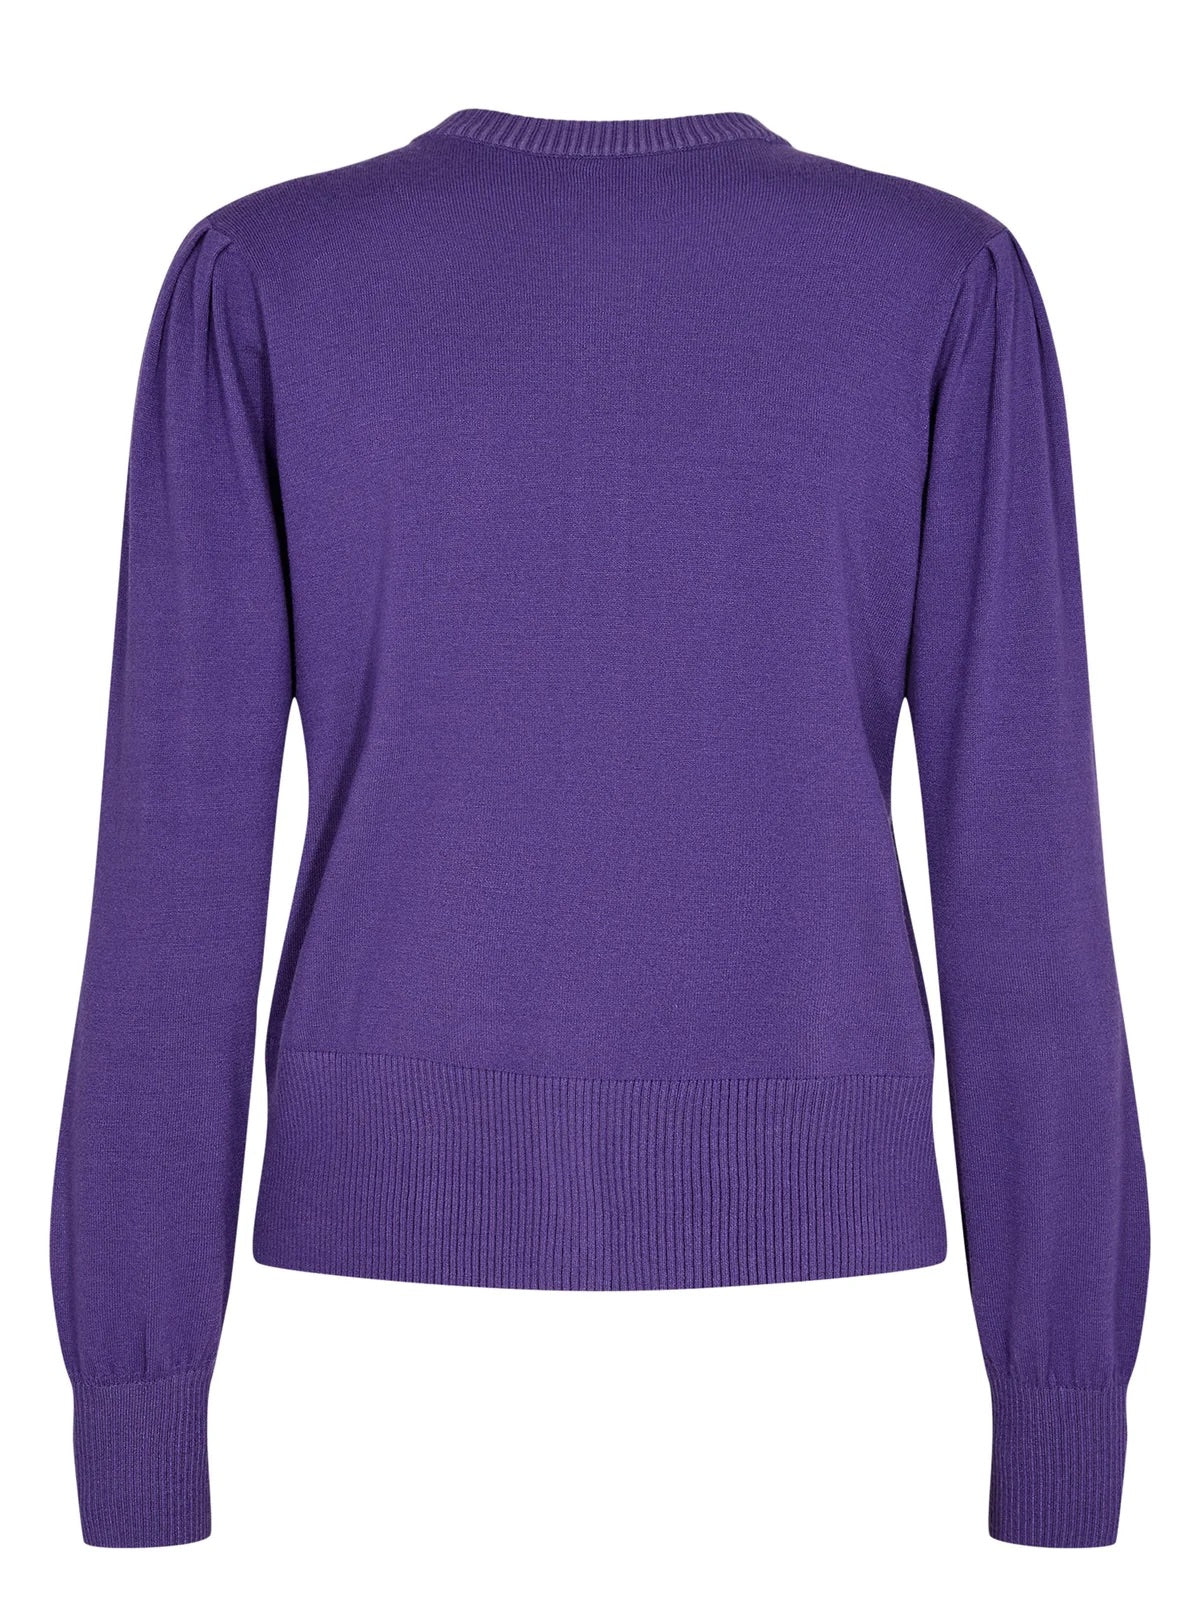 Nümph Nutrille Long Sleeved Cardigan in Tilandsia Purple